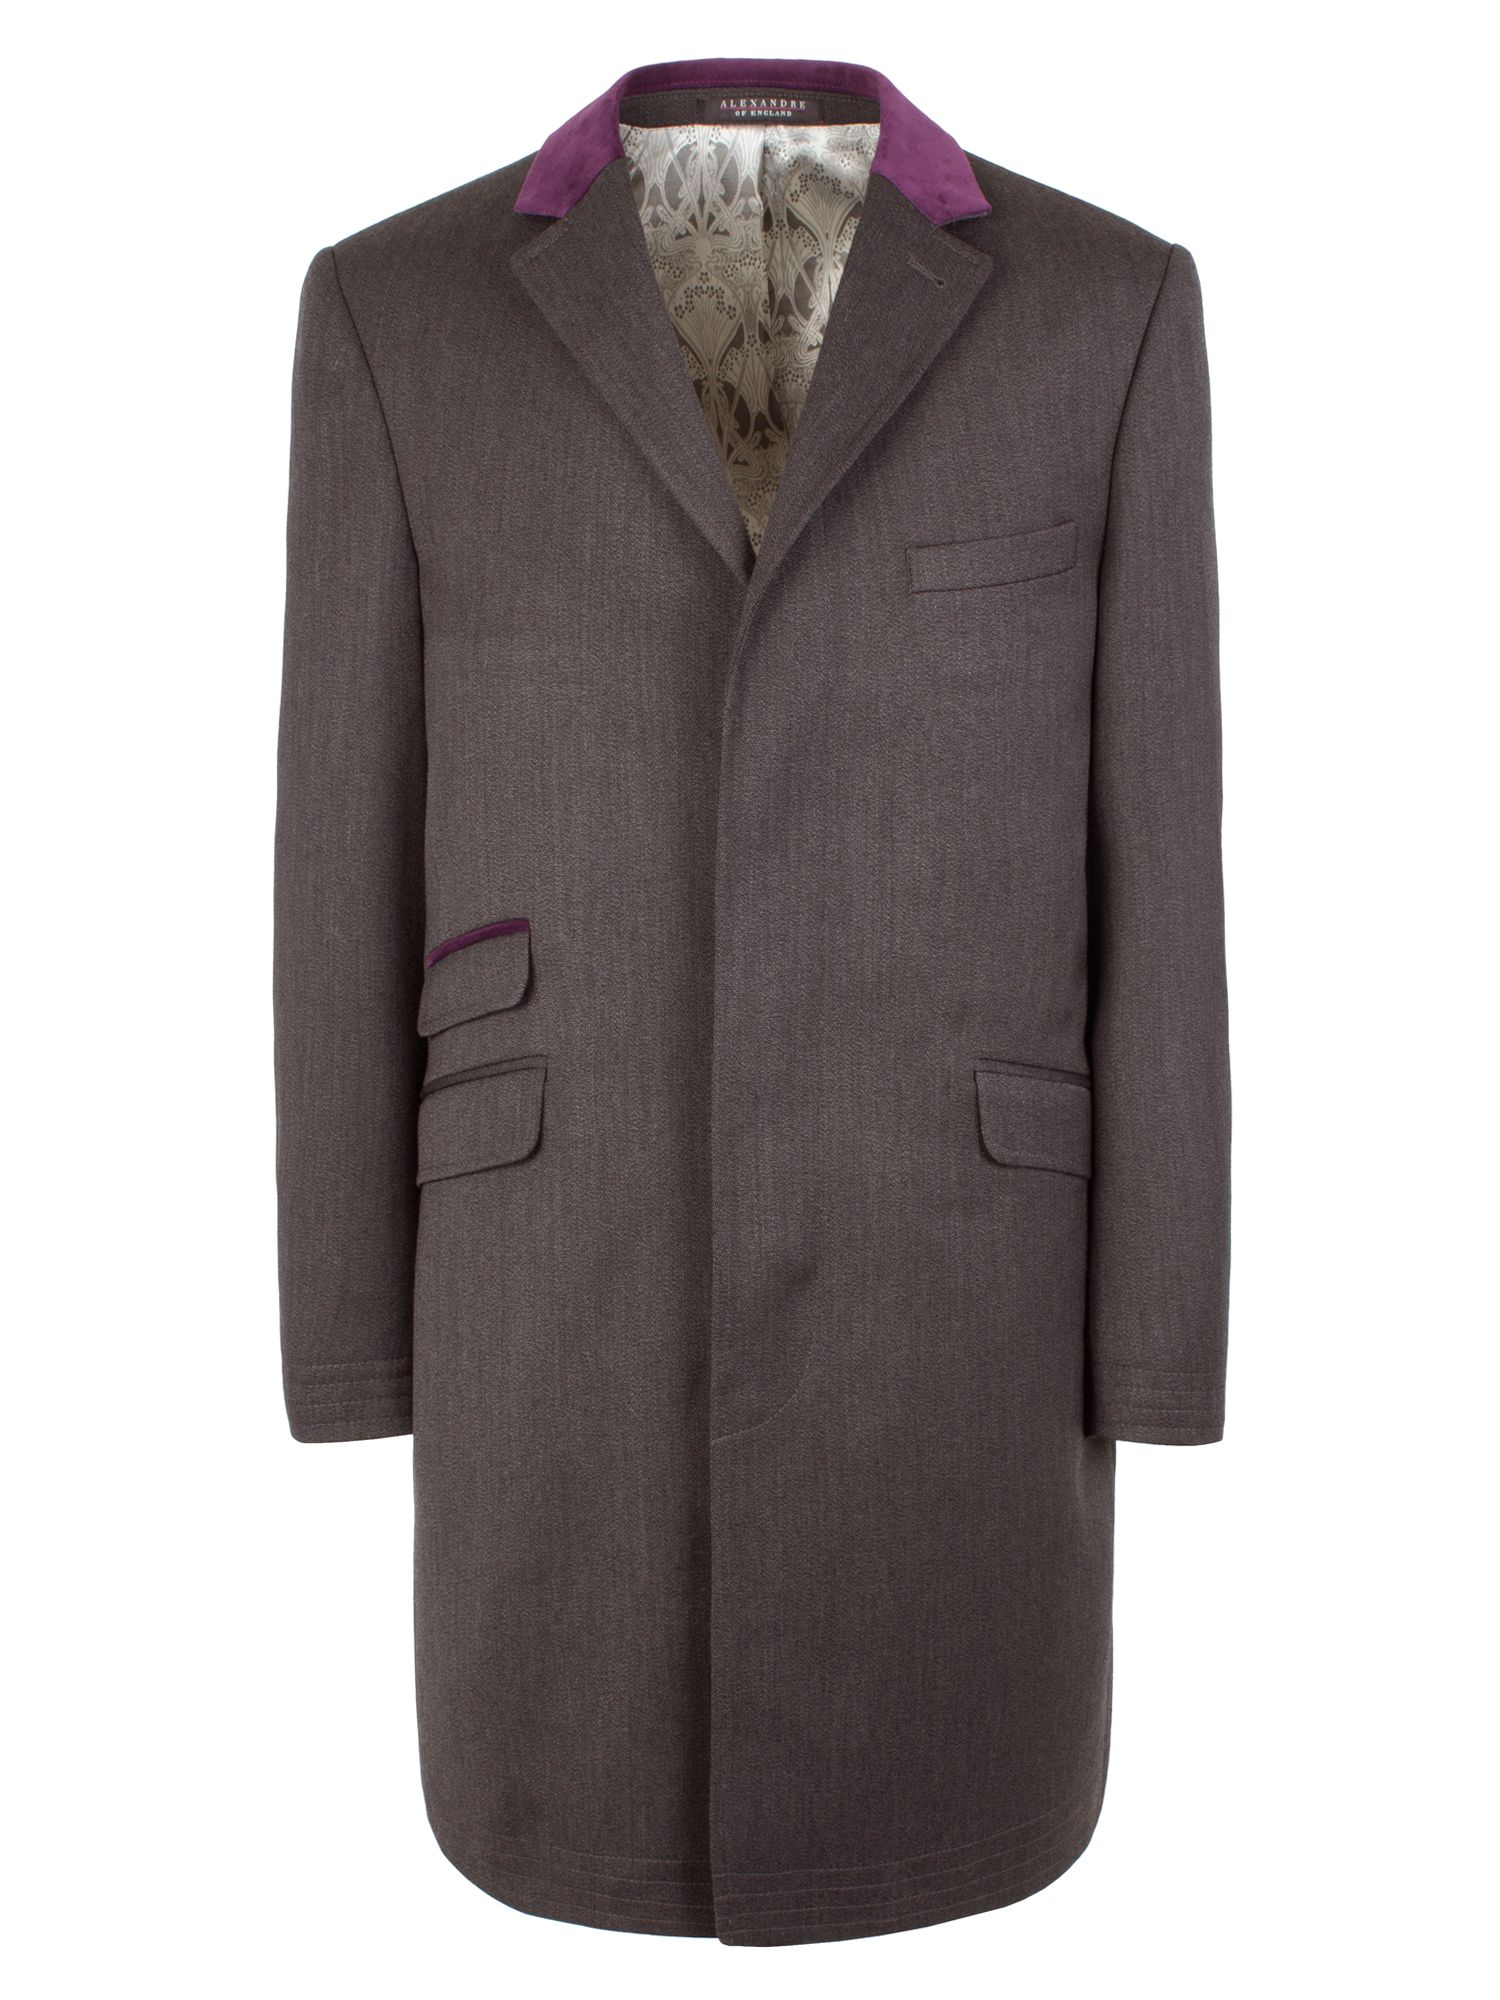 Alexandre of england Covert Formal Button Overcoat in Gray for Men | Lyst